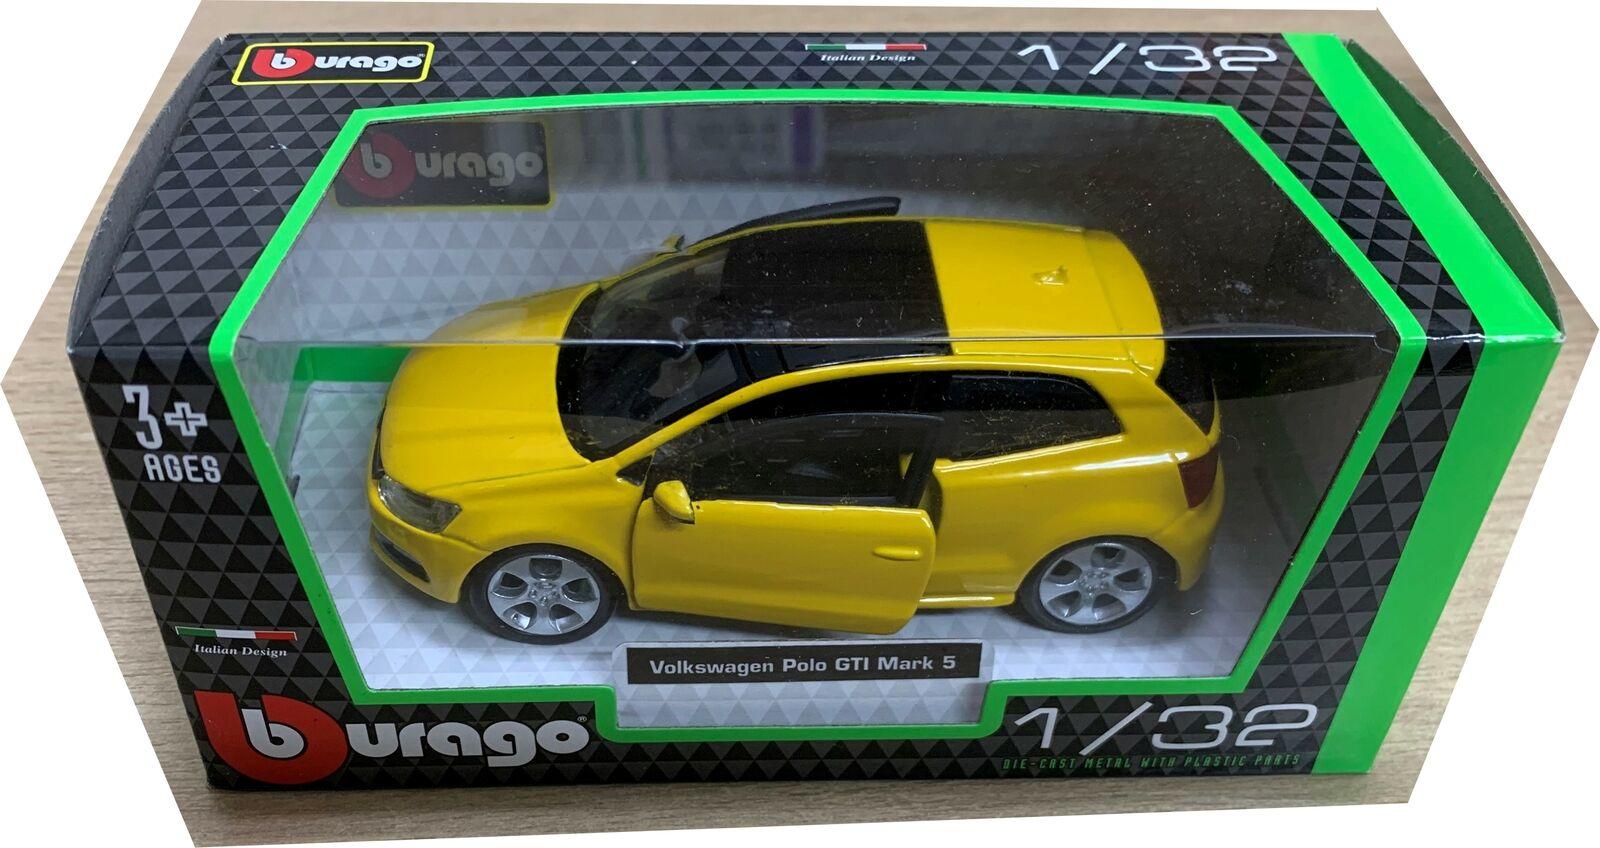 VW Polo GTi mk5 in yellow 1:32 scale diecast car model from Bburago